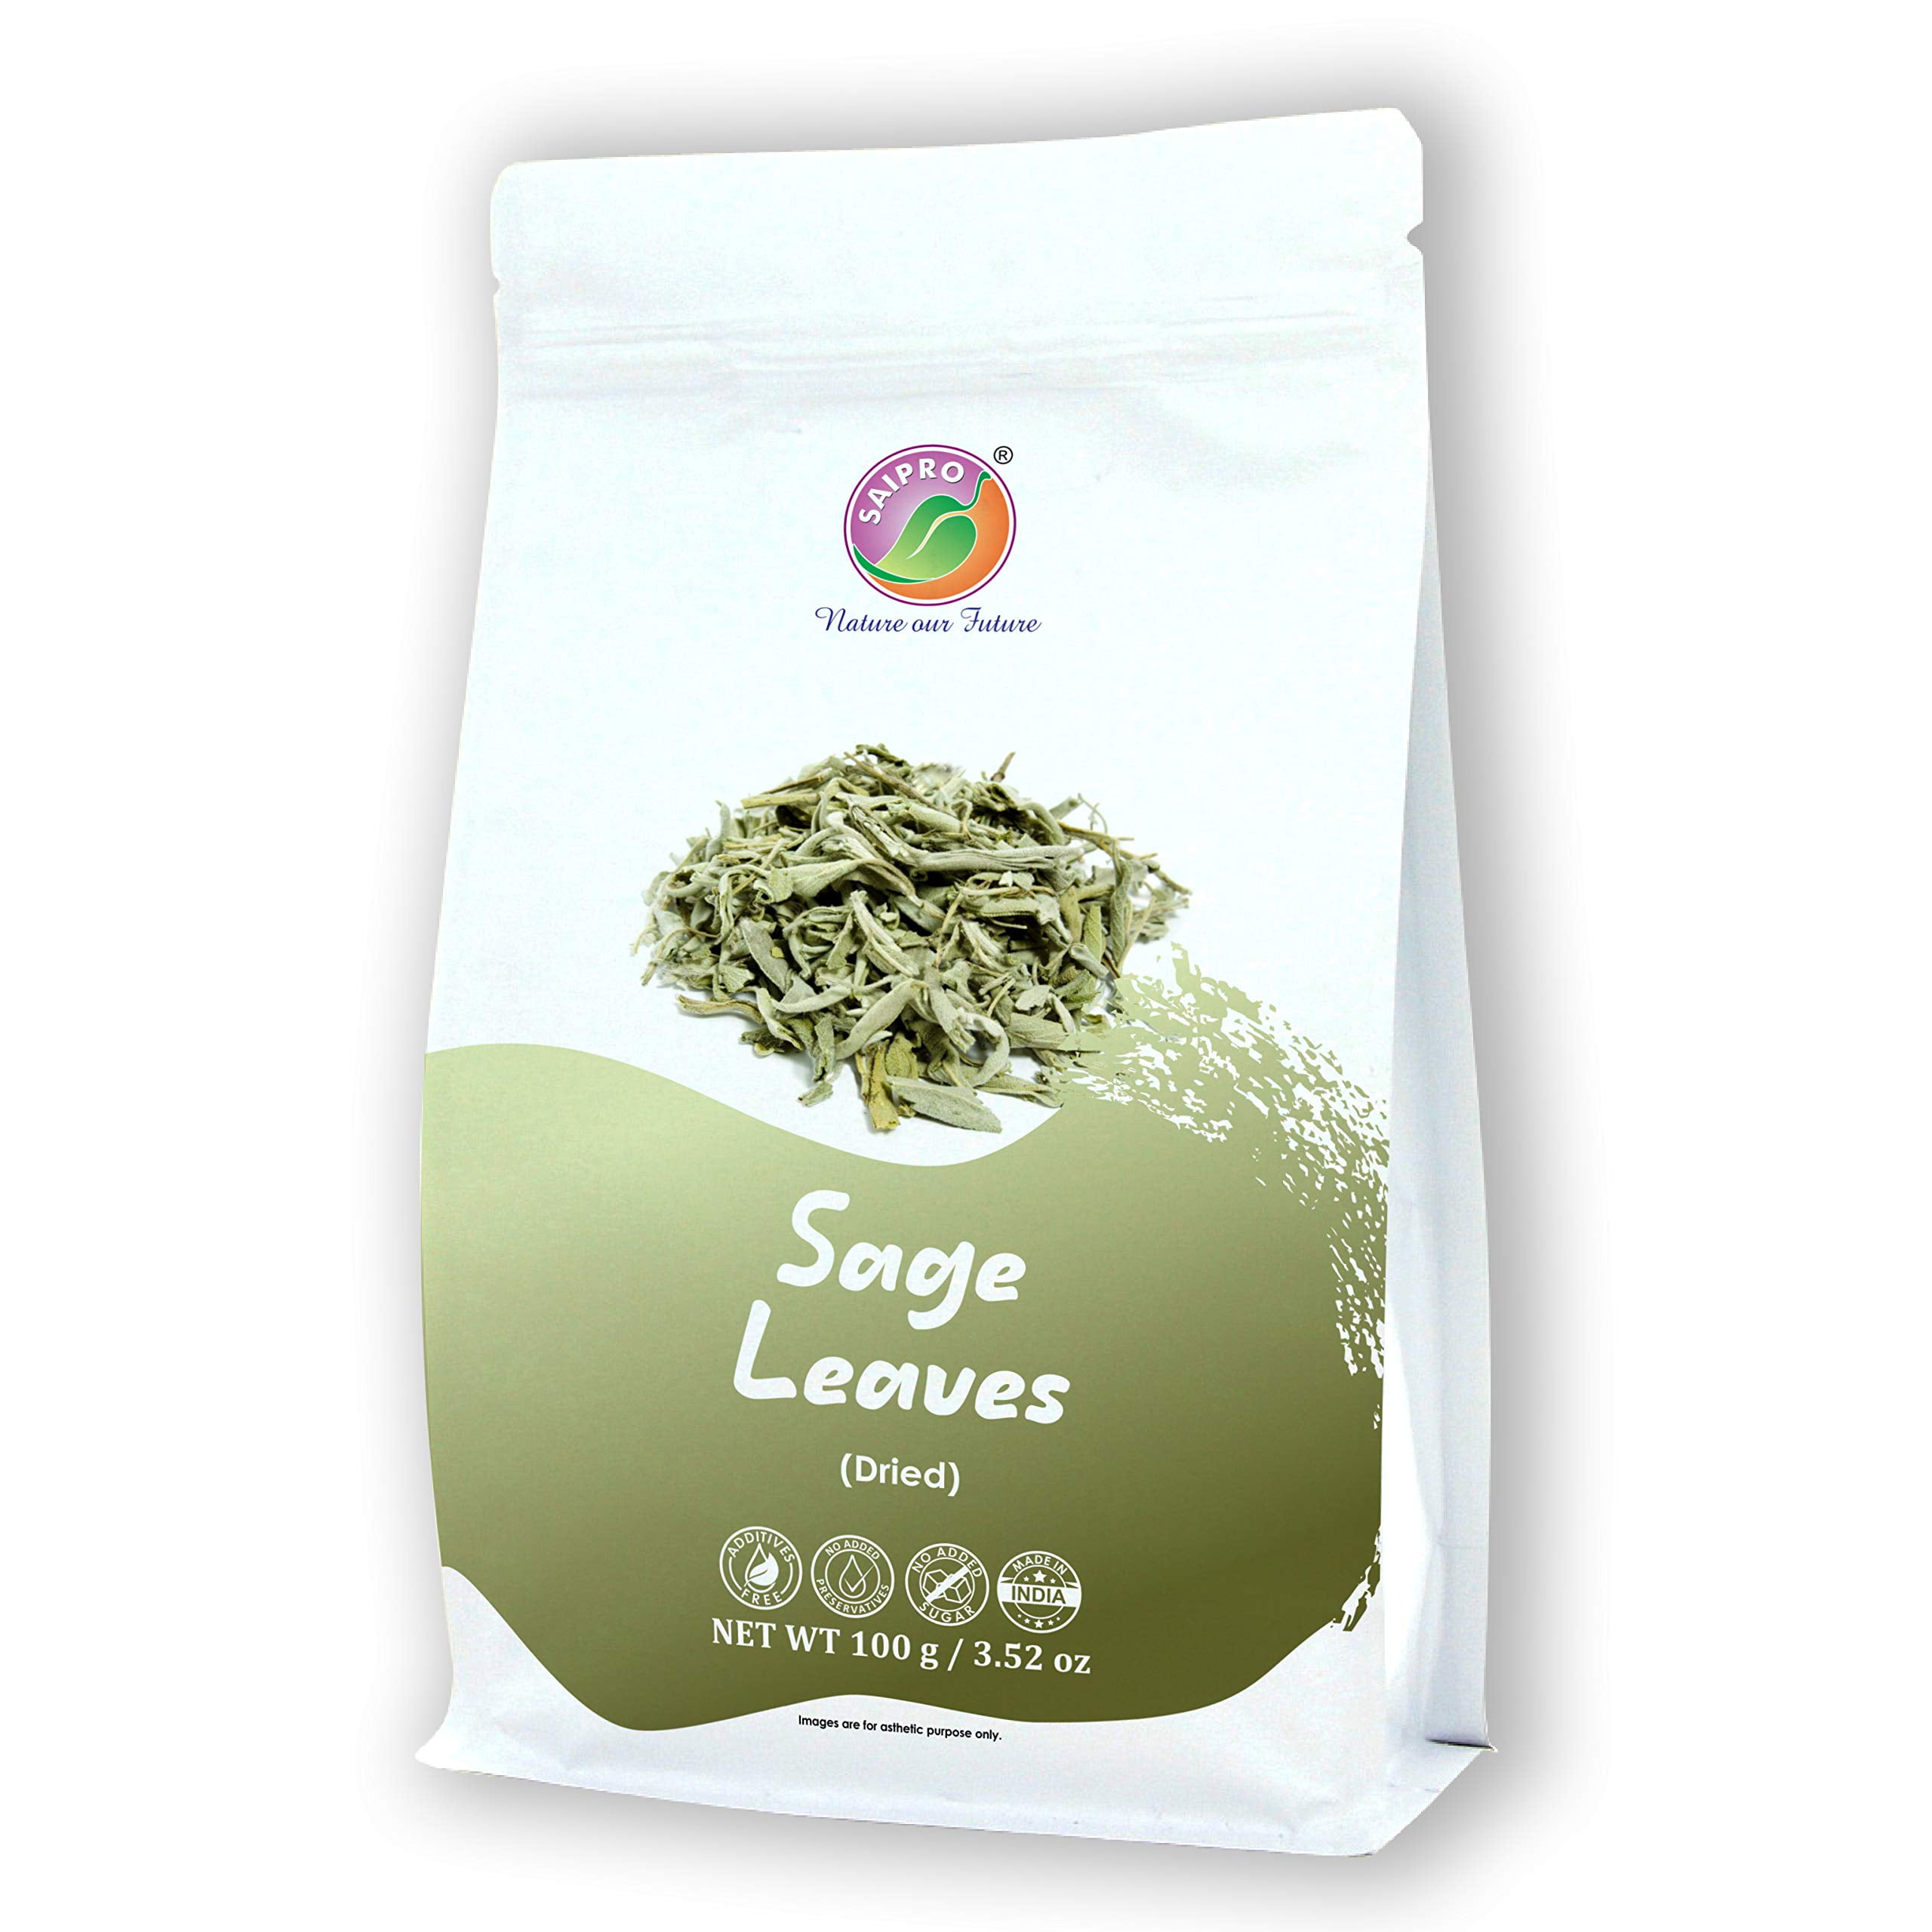 Filippone® Organic Crushed Sage Seasoning, (15 g)(0.52 oz